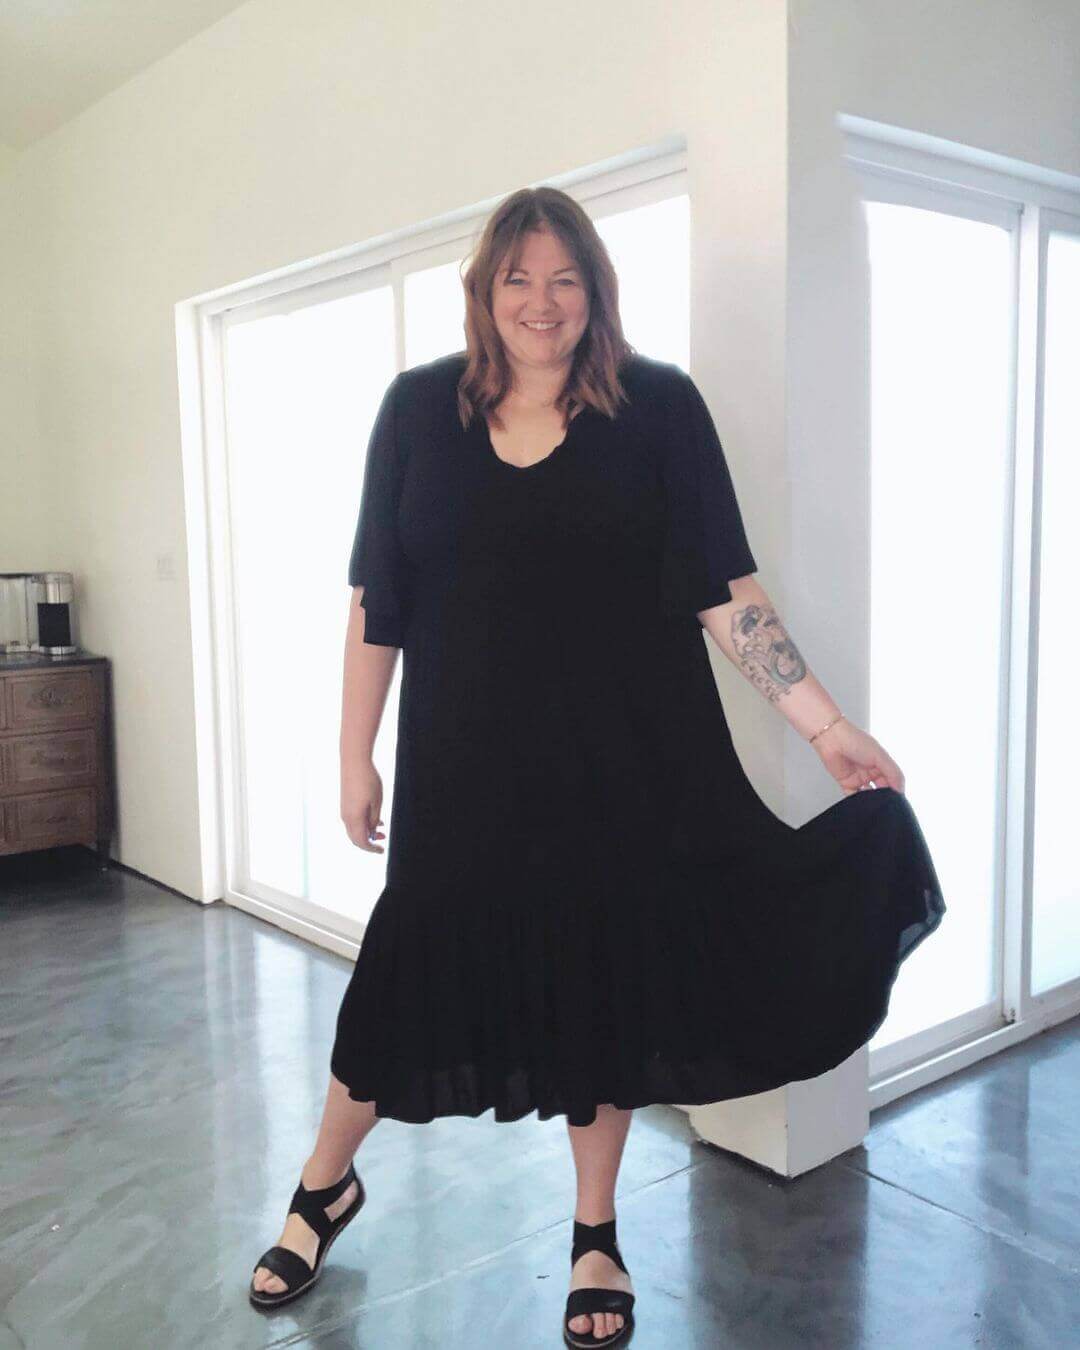 Cleo Short Sleeve Midi Dress in Black